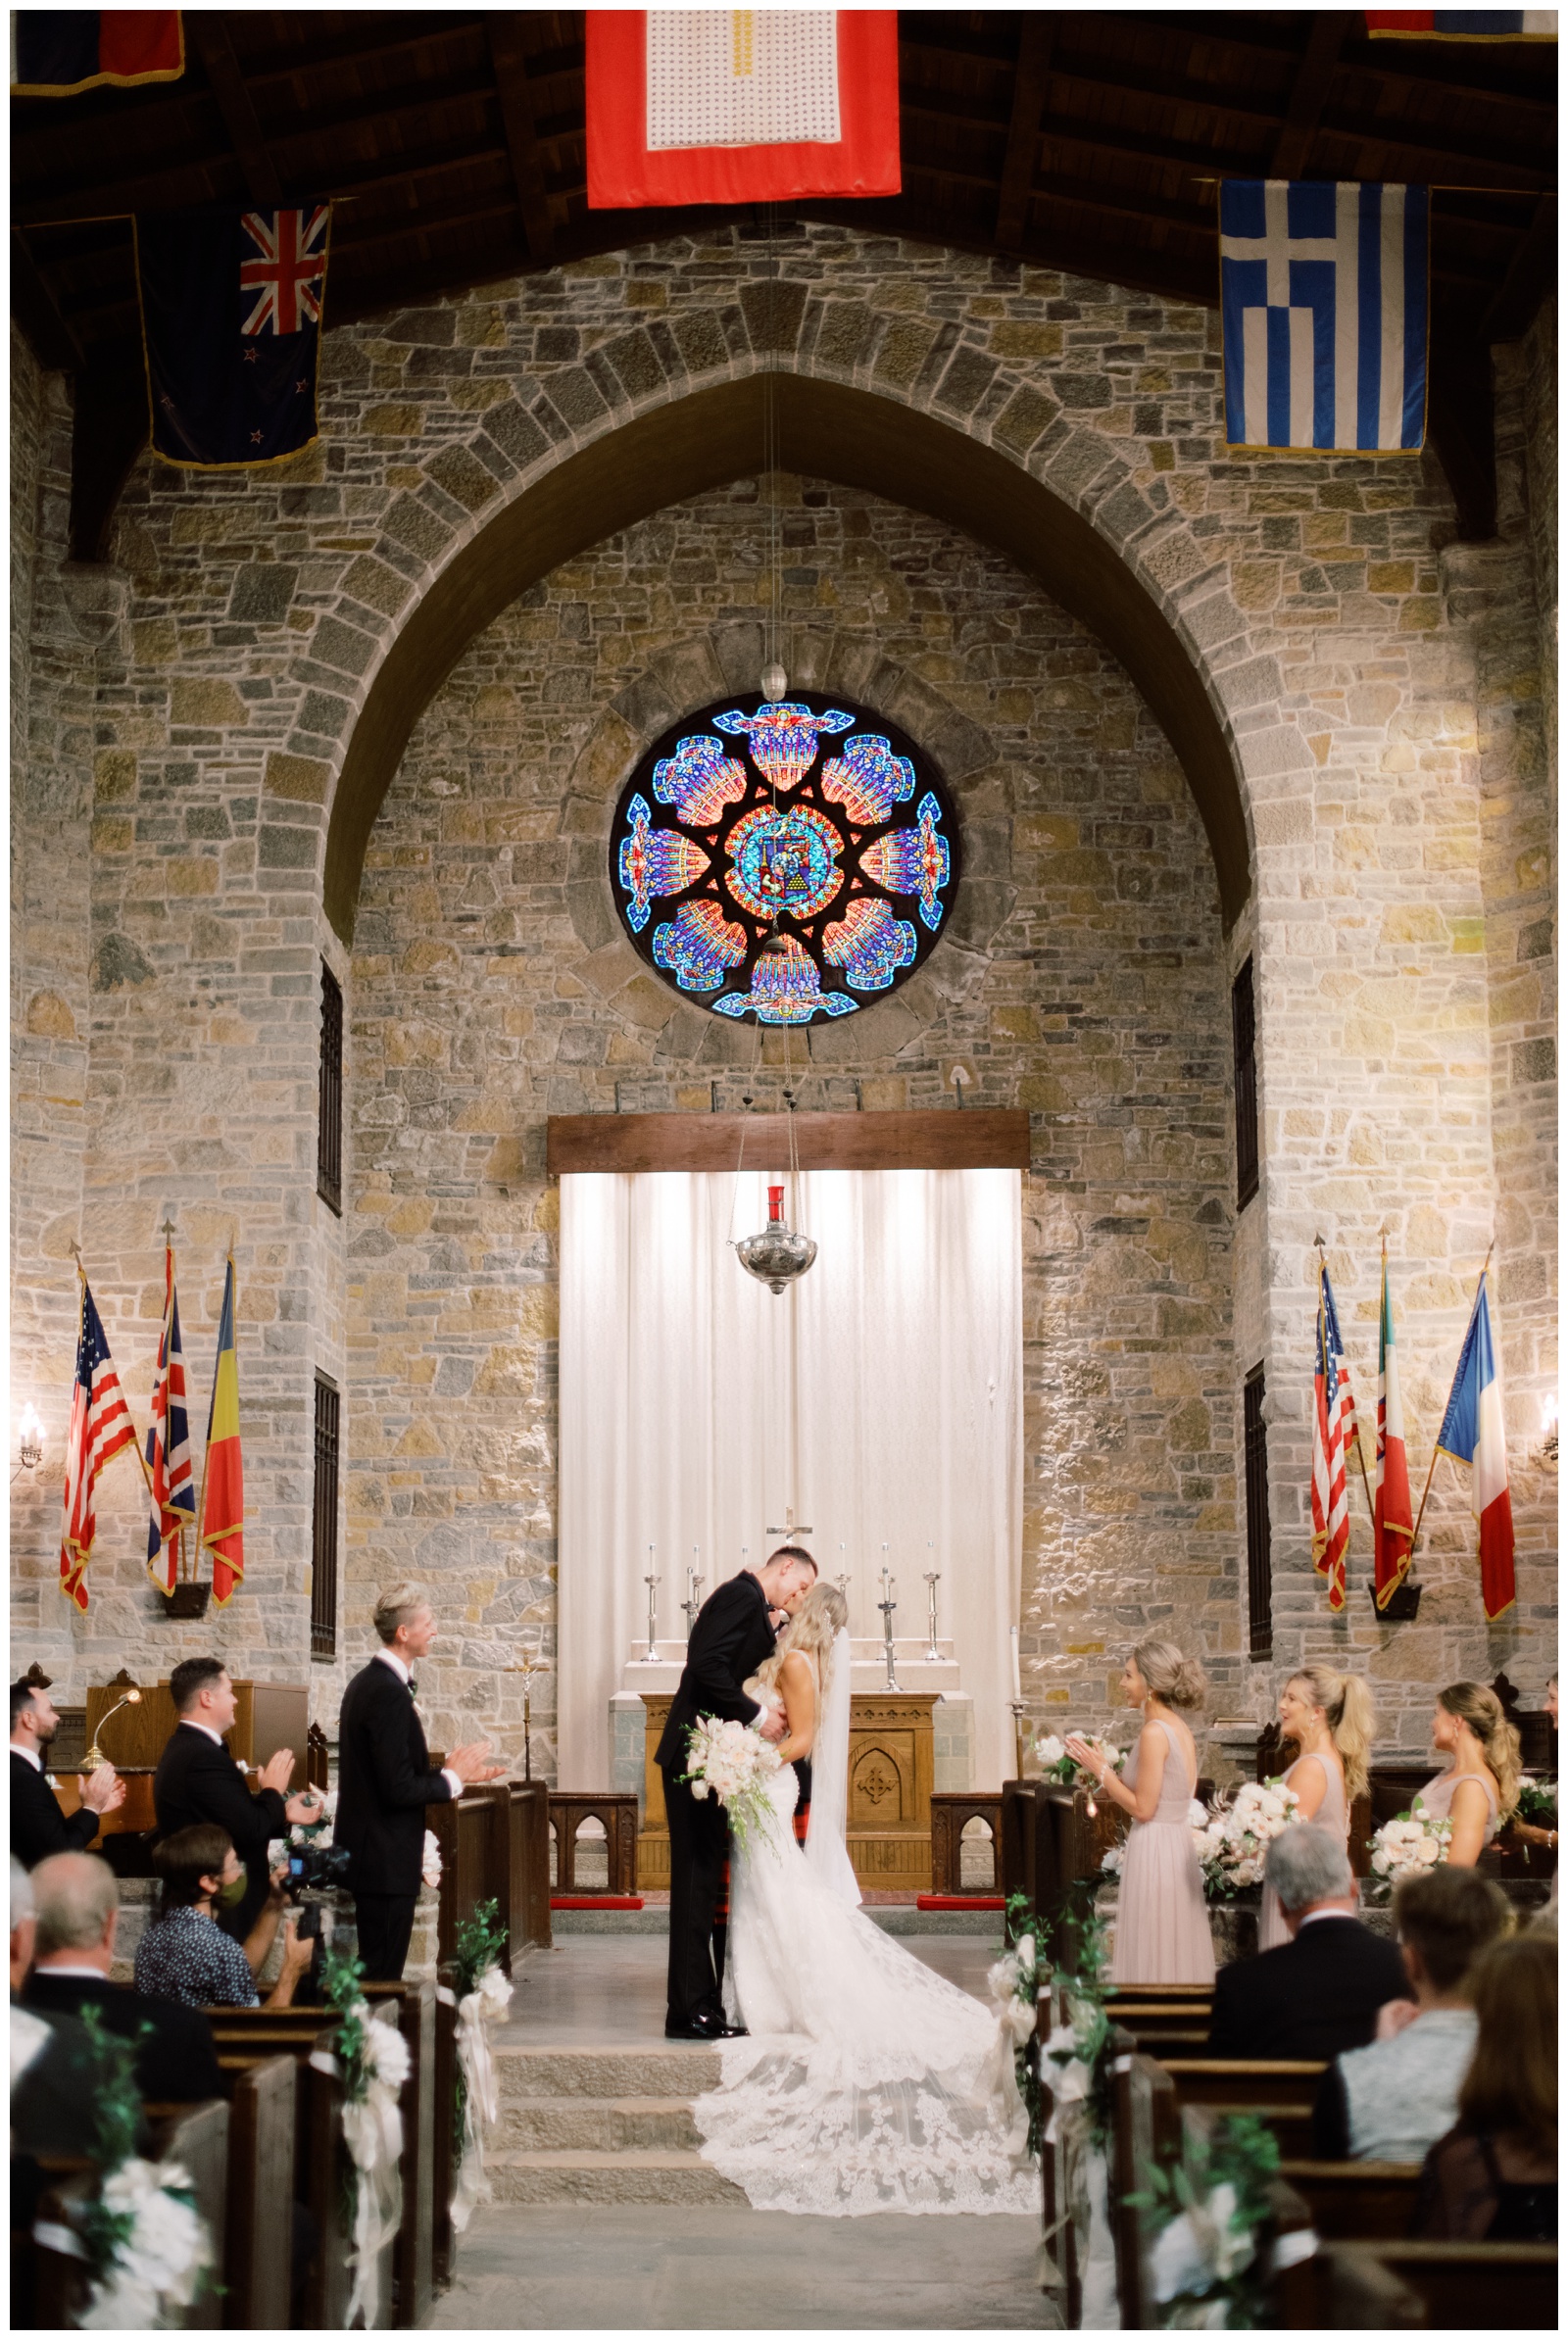 St. John's Northwestern military academy delafield wisconsin wedding venue fine art wedding photographer